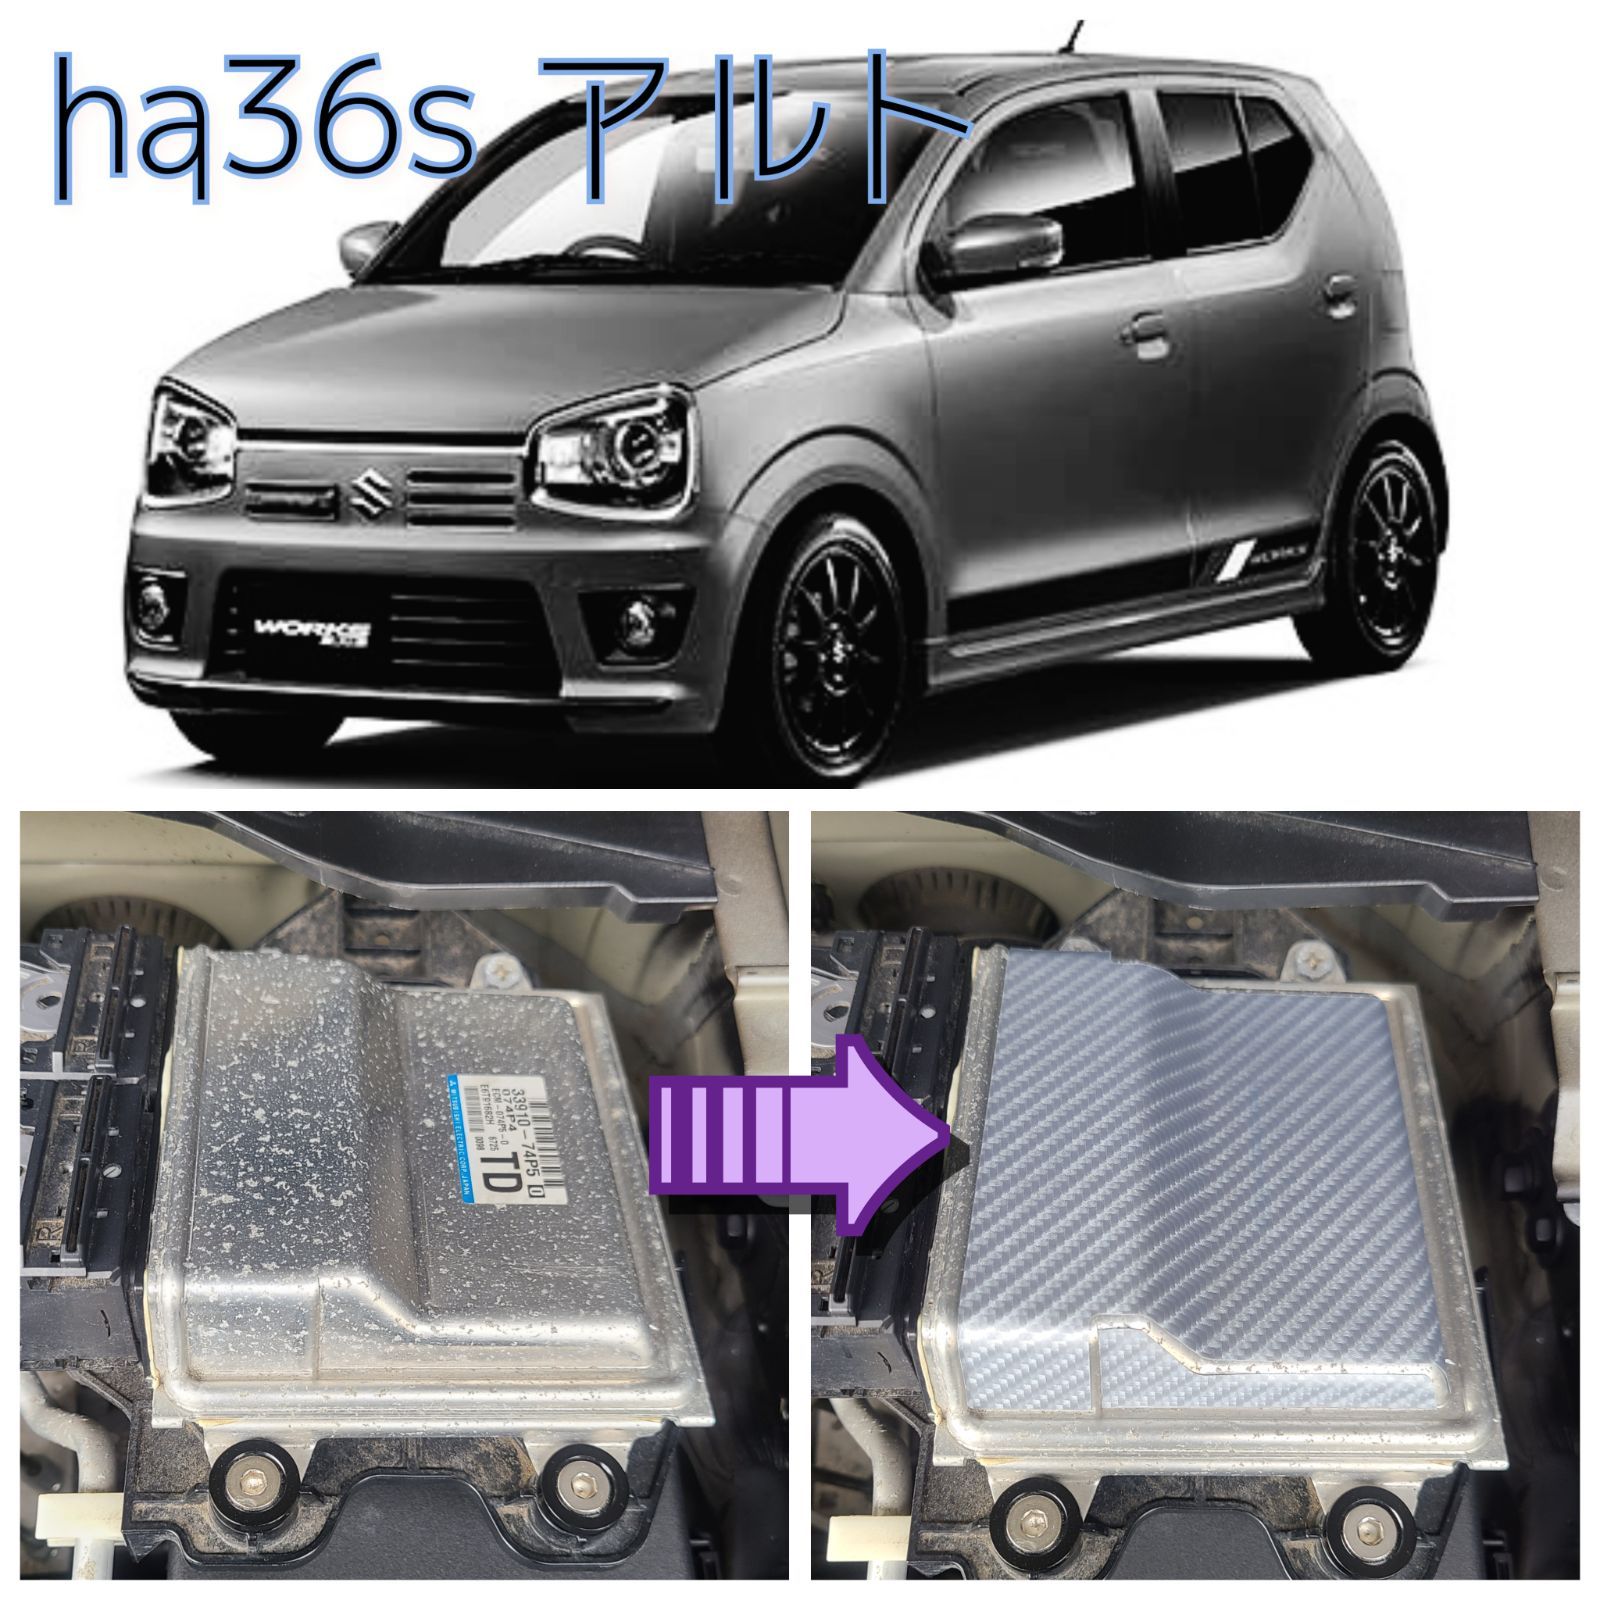 ha36s ha36vアルト用カーボン調ECU CPUカバーシート/ターボRS/WORKSワークス - メルカリ